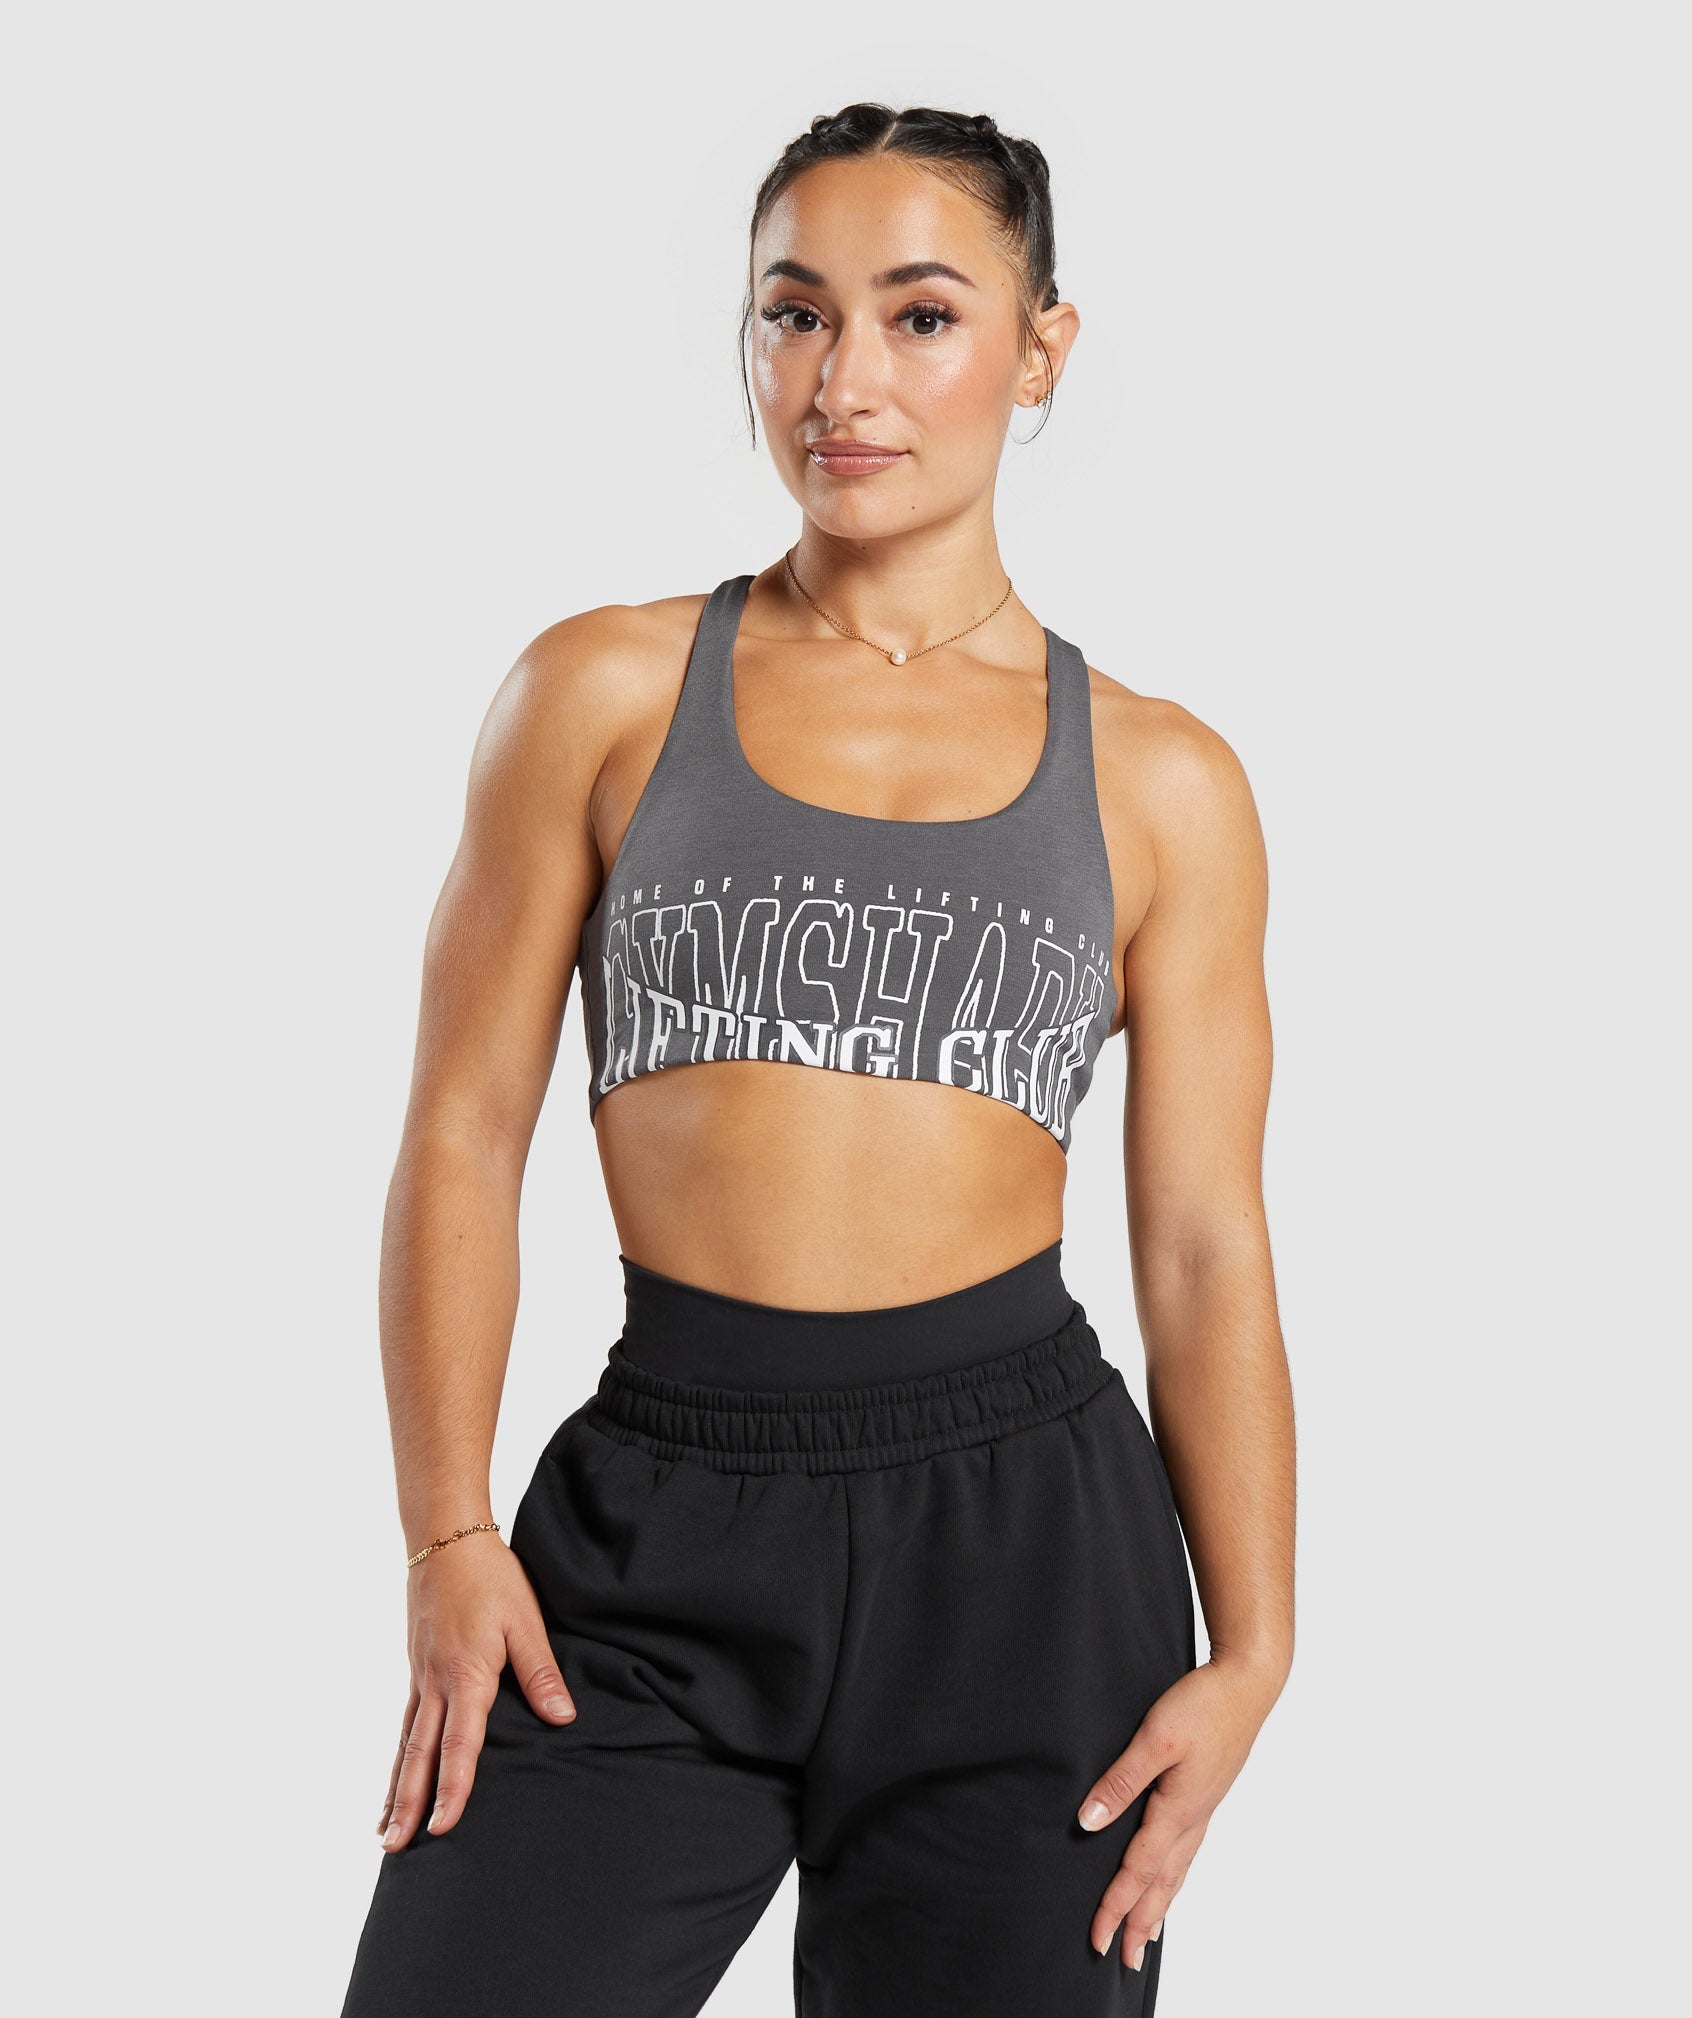 Reebok TRAINING ENTRENAMIENTO energy glow  sport bra Size XL - $16 (46%  Off Retail) - From jello